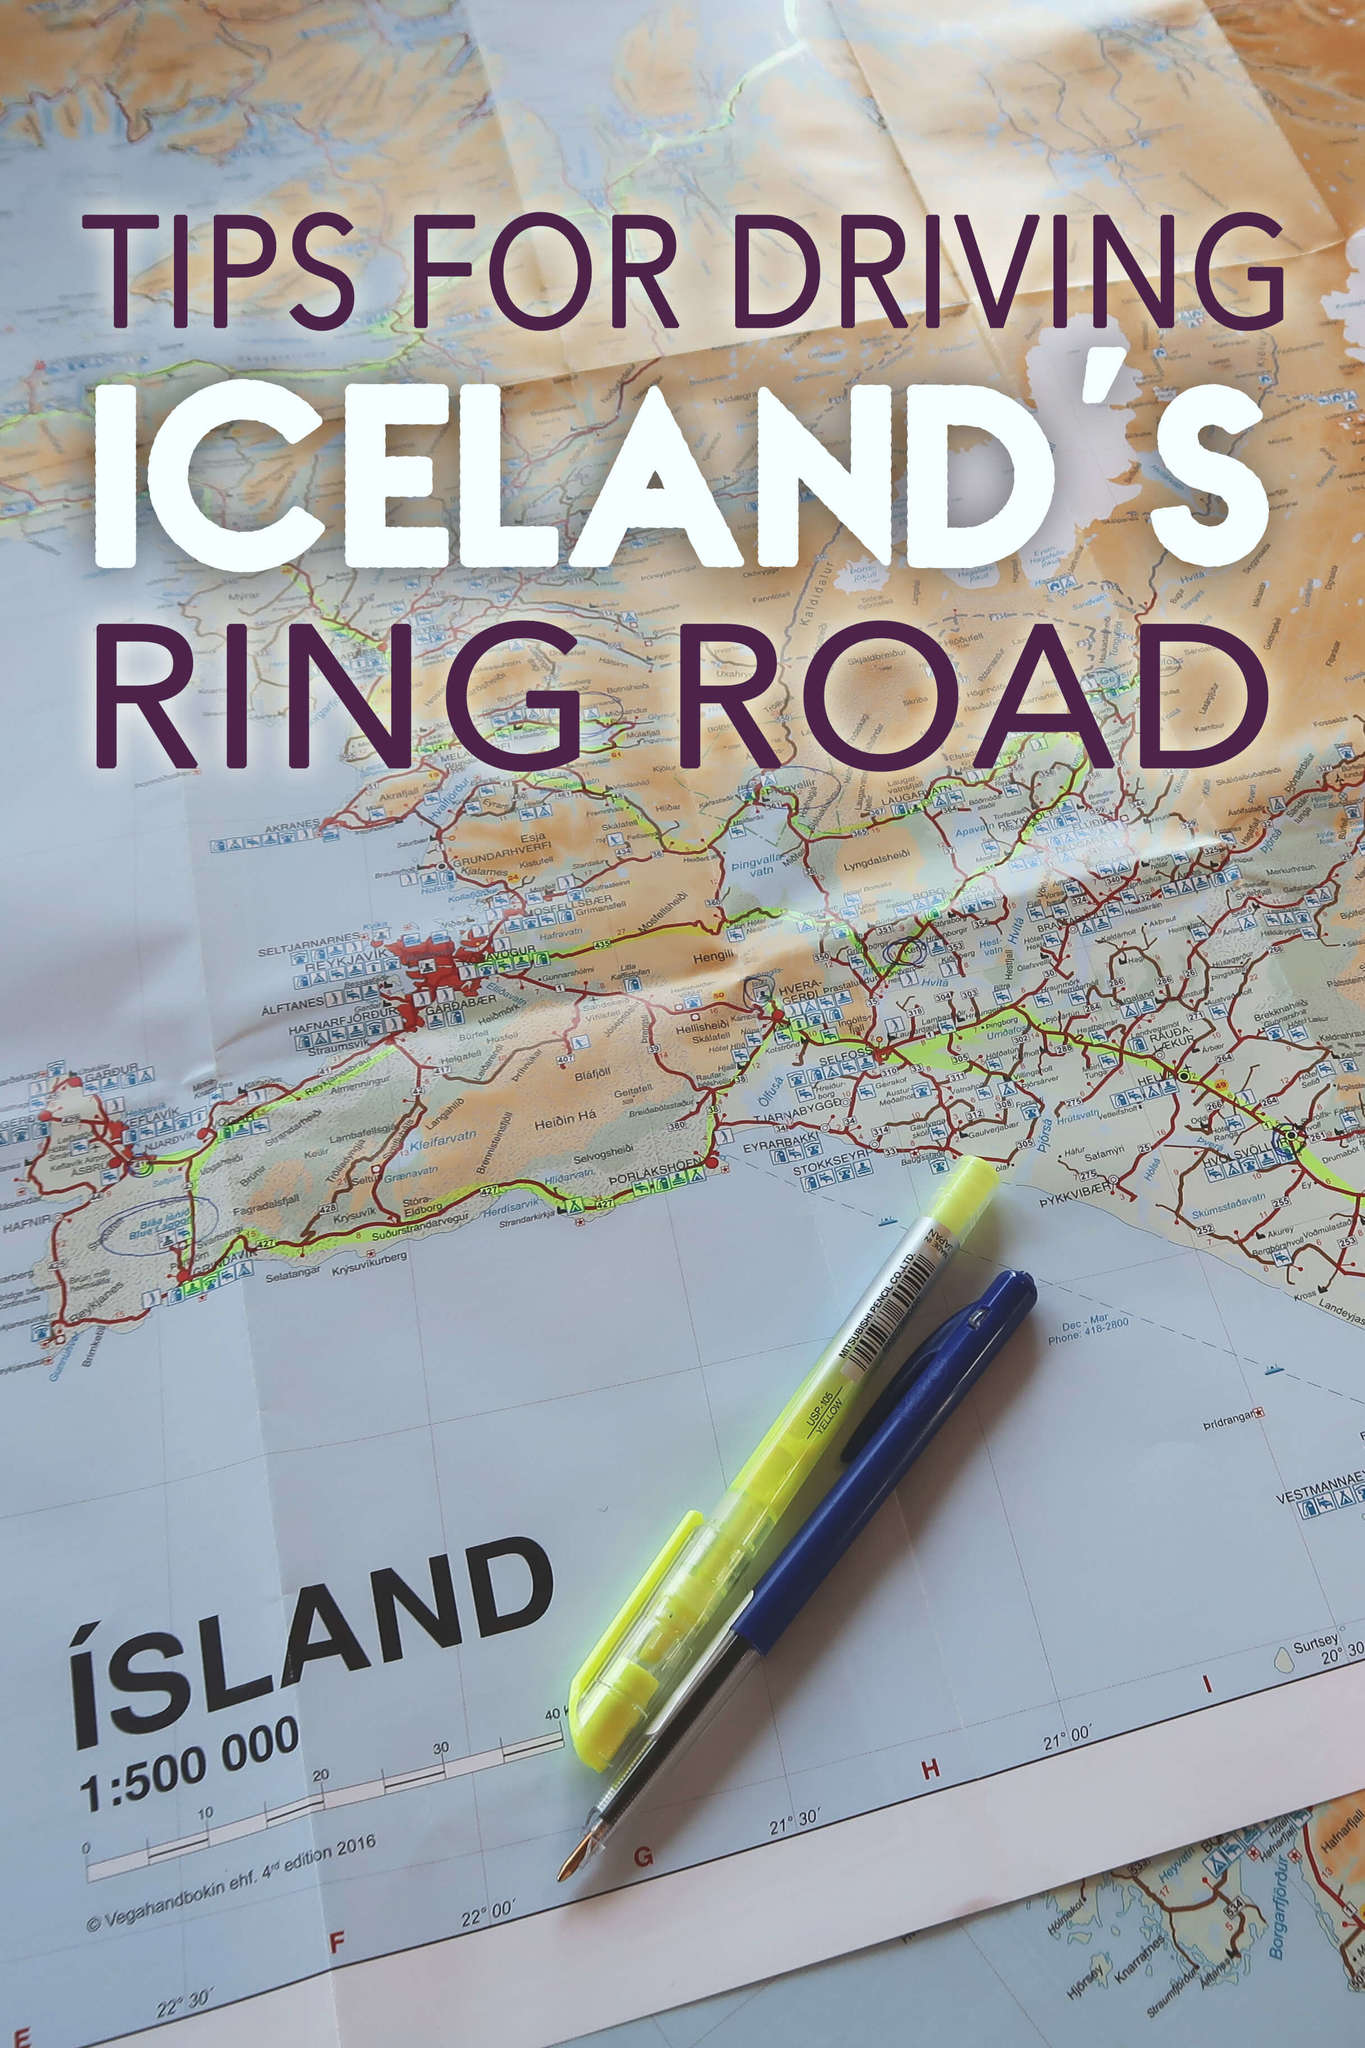 Conseils pour conduire l'Islande's Ring Road